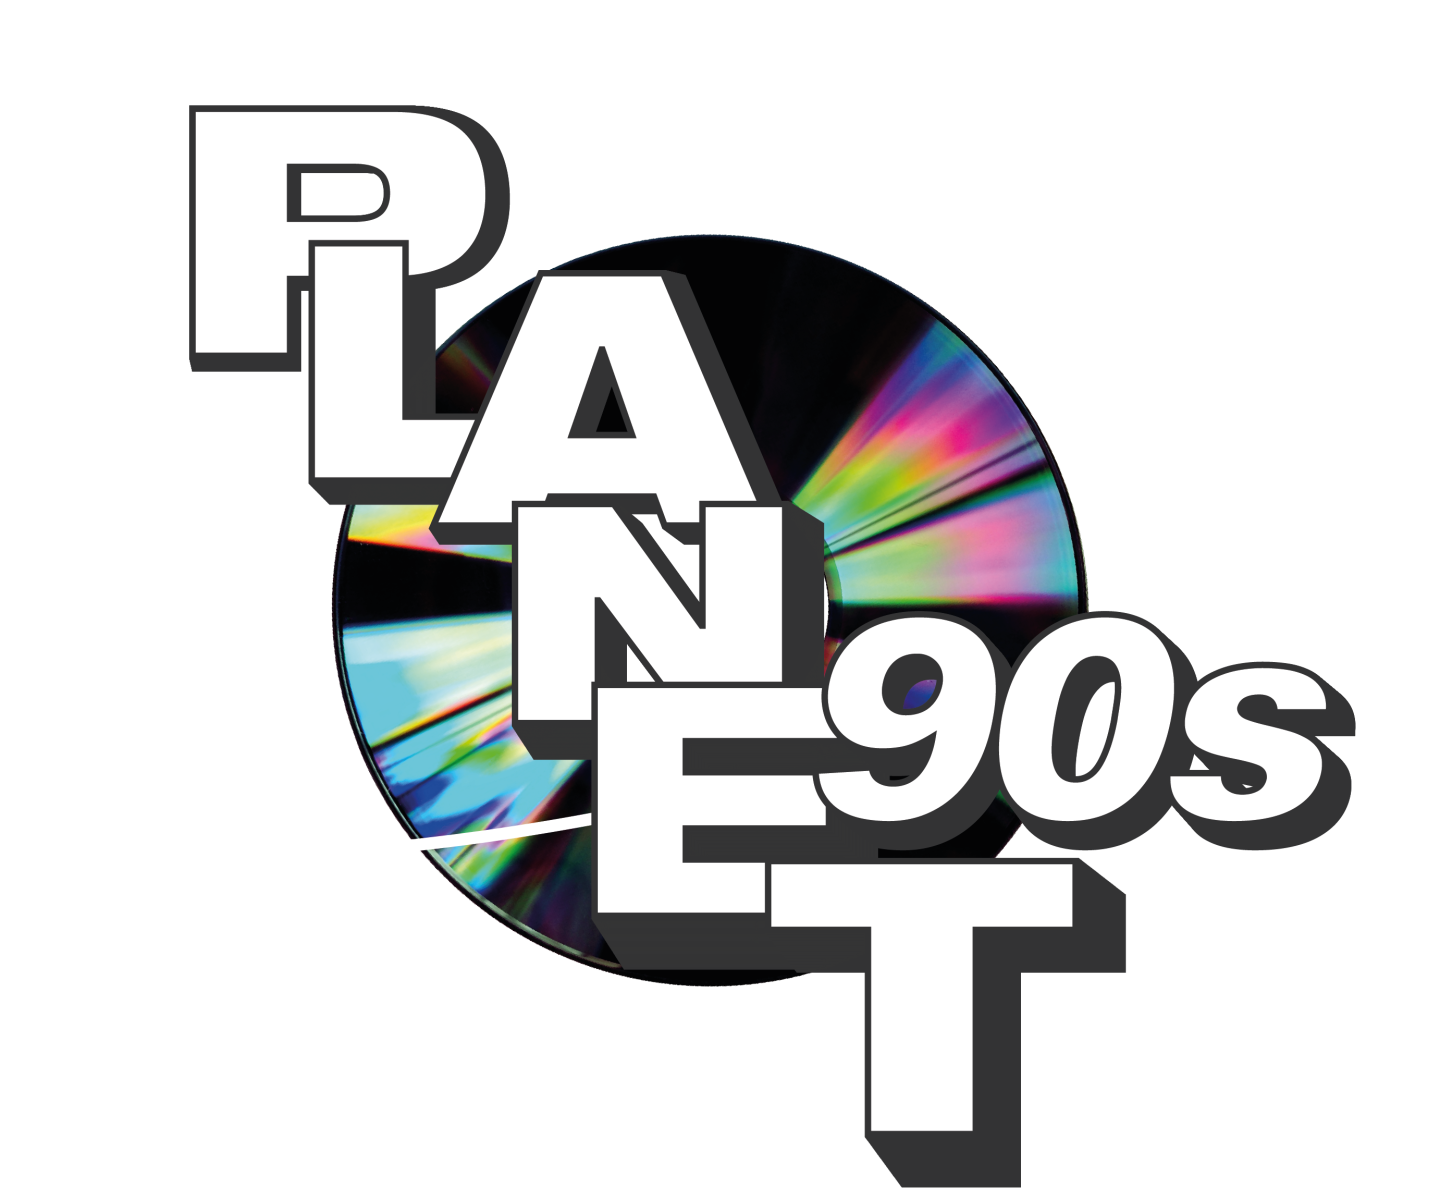 Planet 90s 5